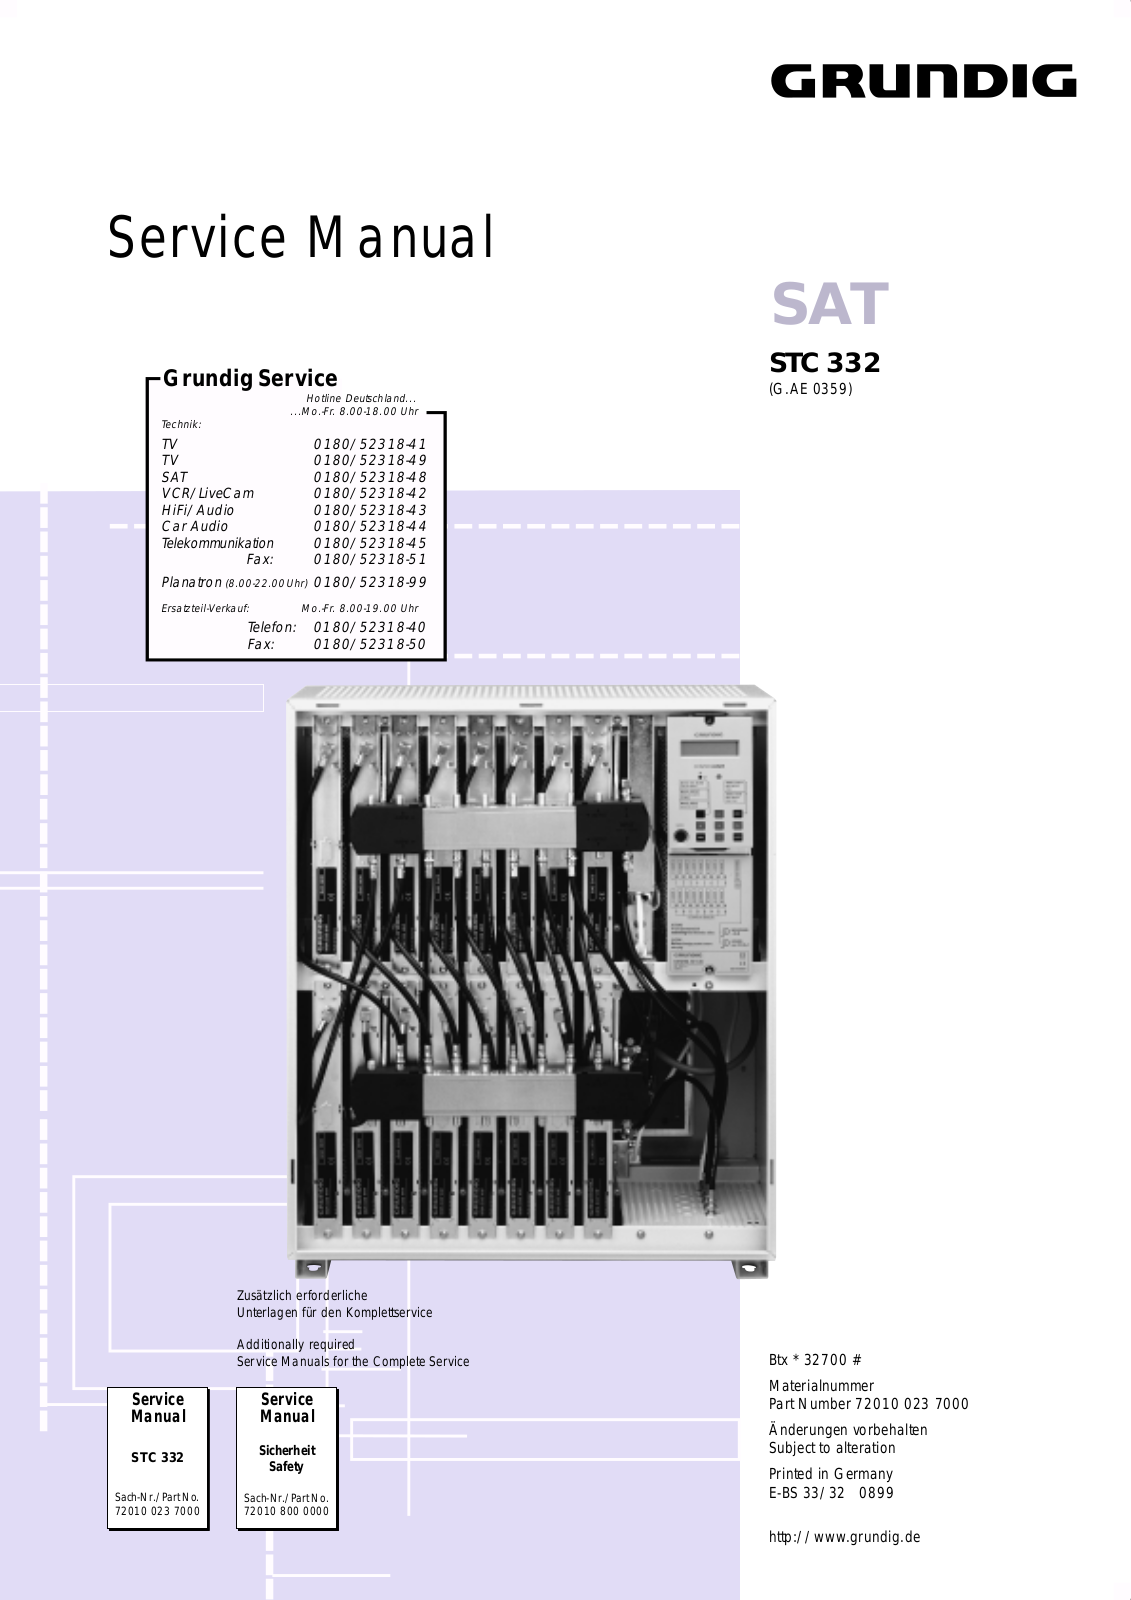 GRUNDIG STC 332 Service Manual